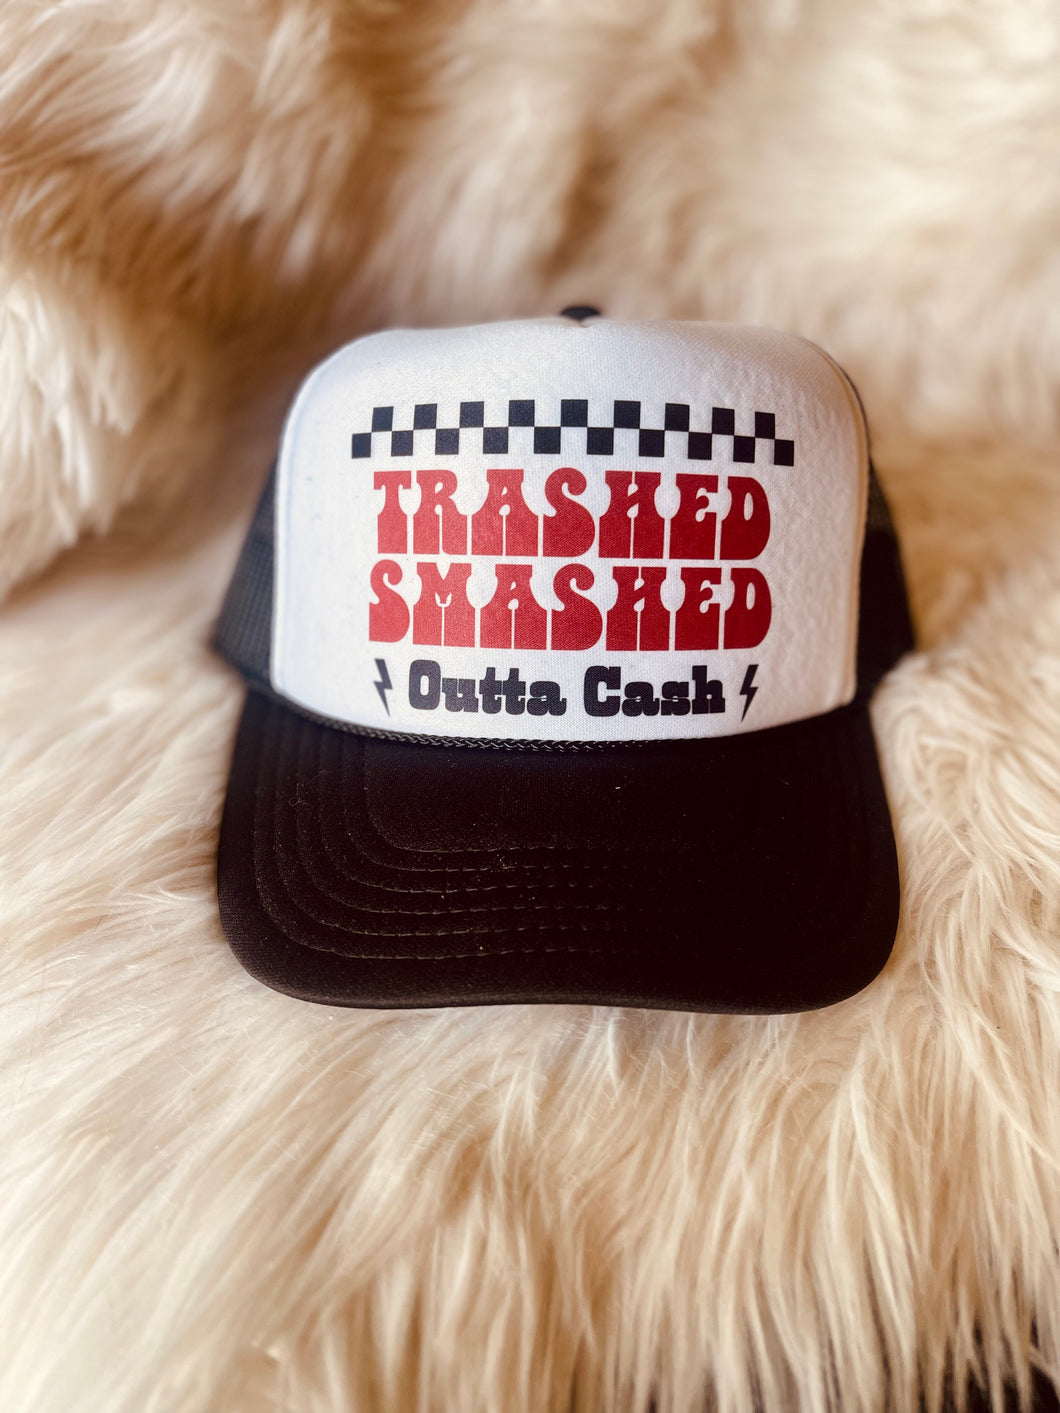 Trashed, Smashed, Outta Cash Trucker Hat 2.0